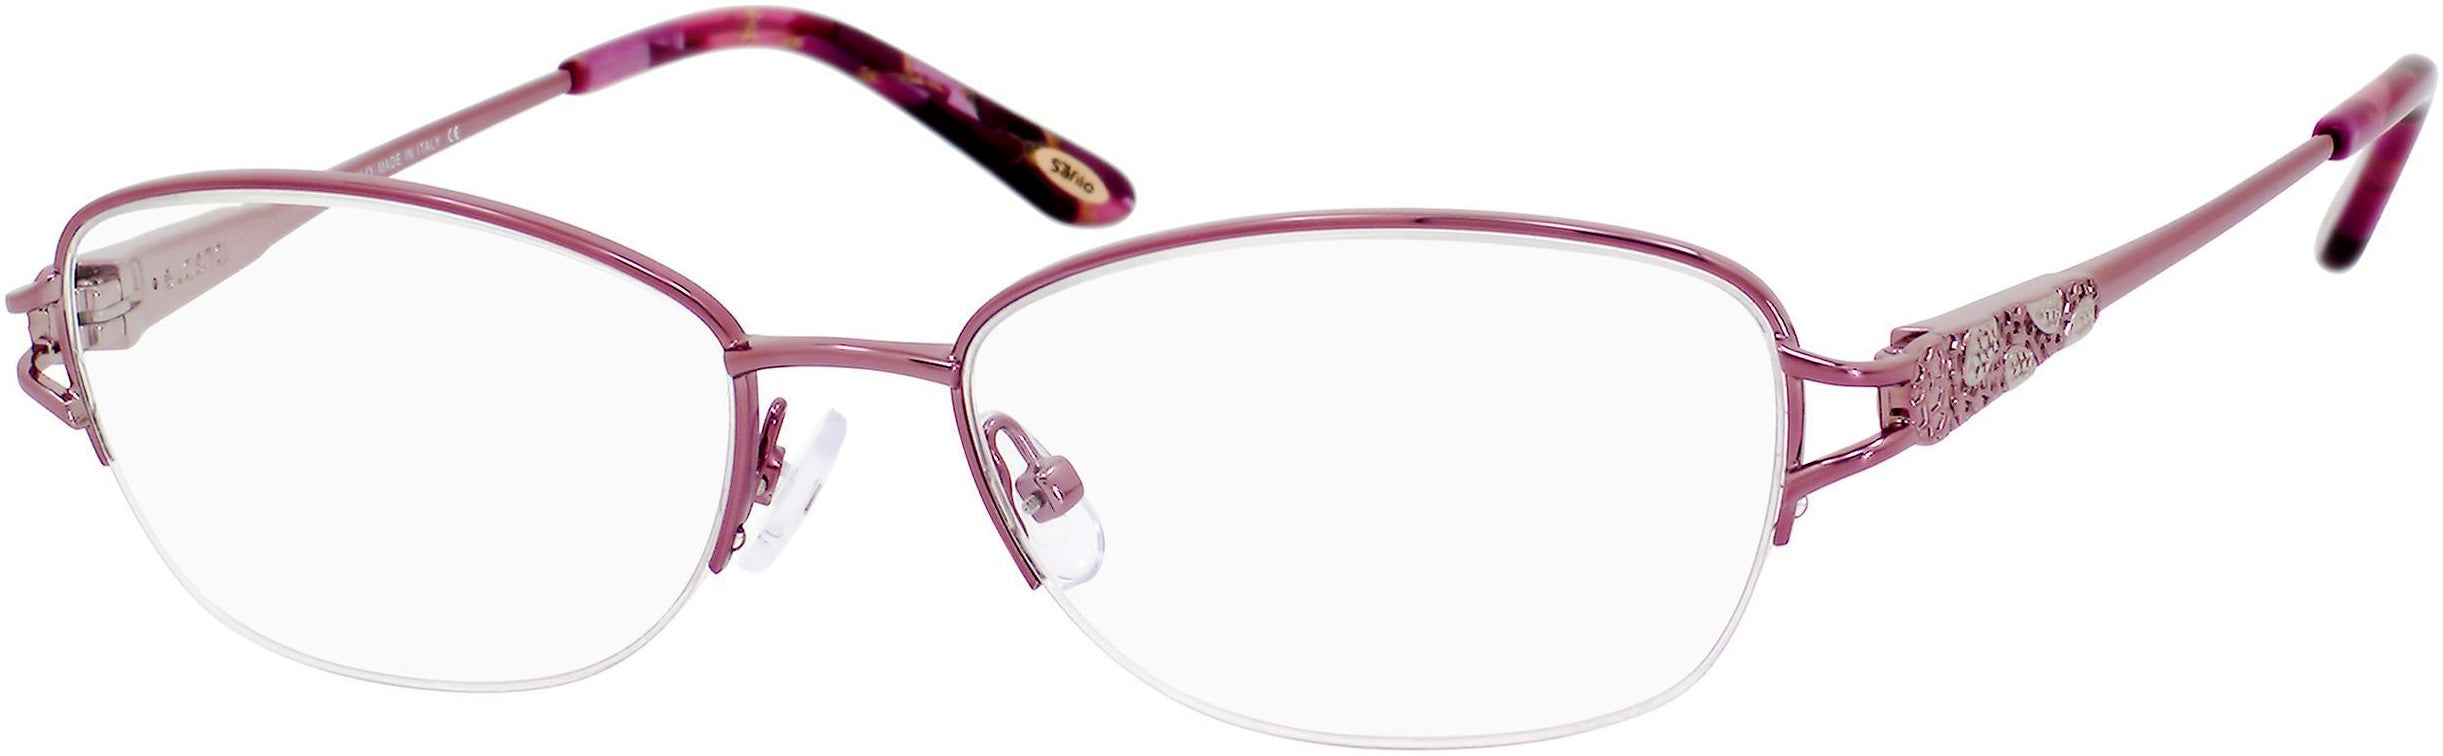  Elasta 4856/N Oval Modified Eyeglasses 0NEH-0NEH  Rose (00 Demo Lens)